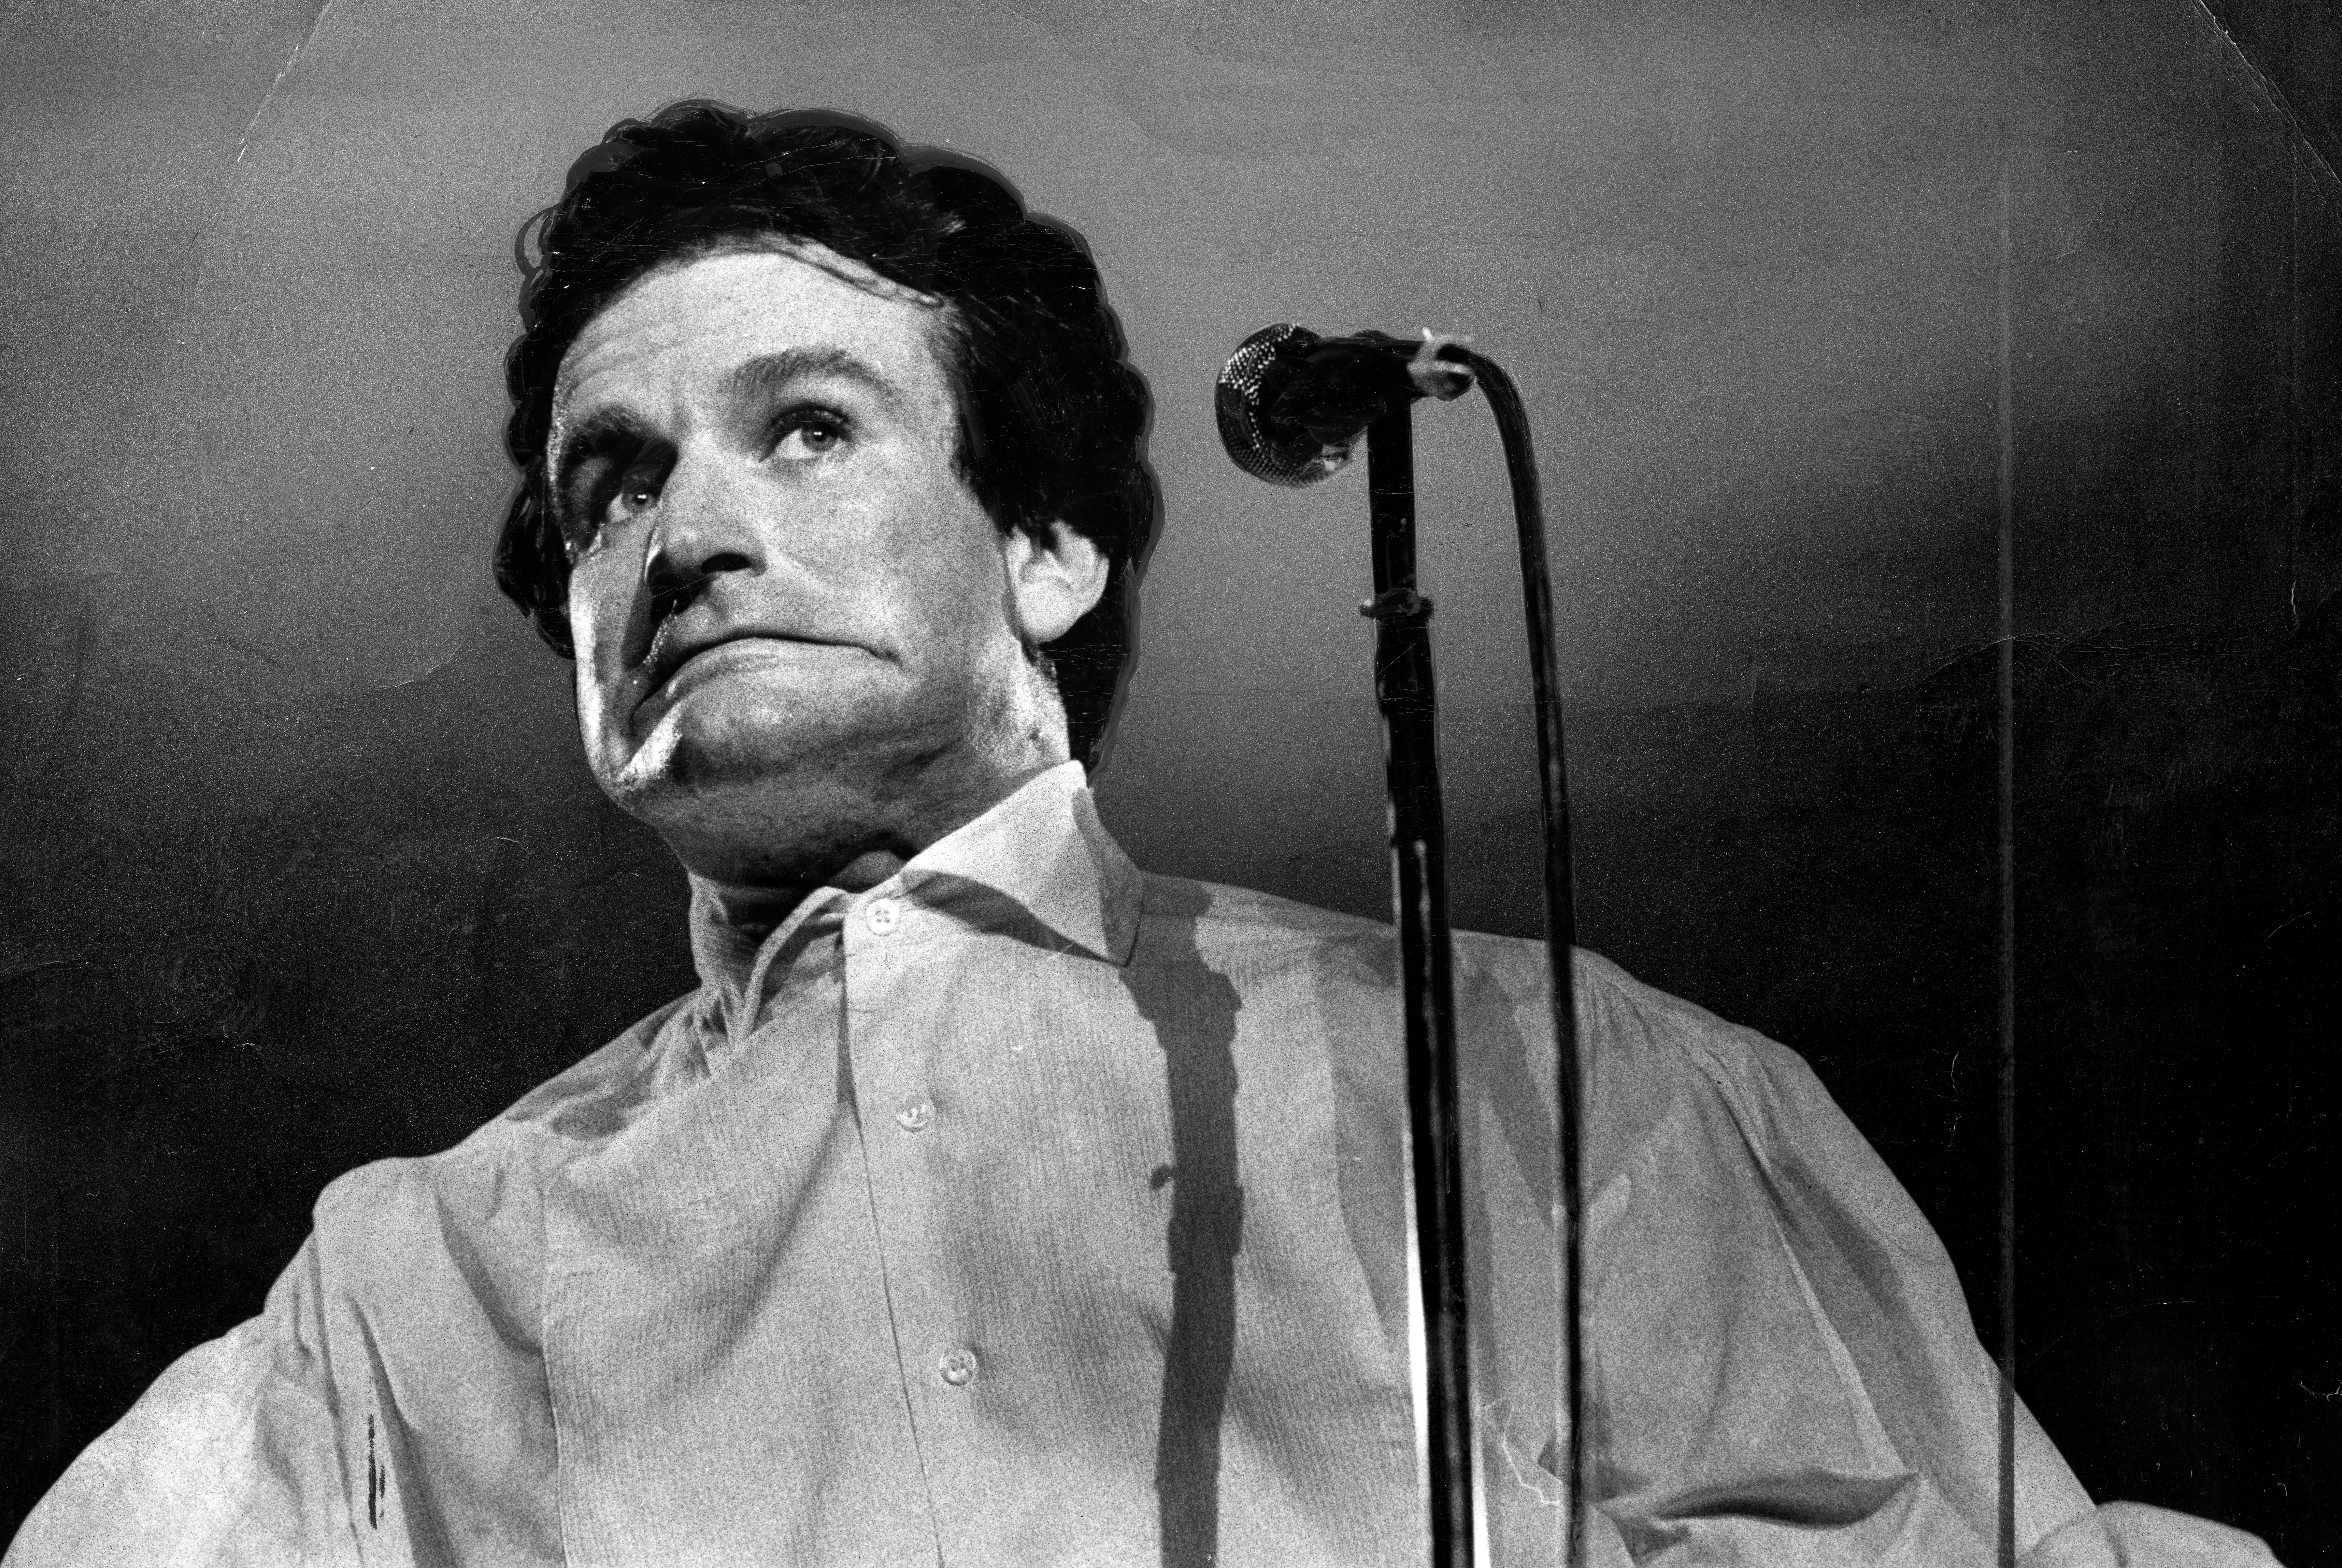 Robin Williams in September of 1981